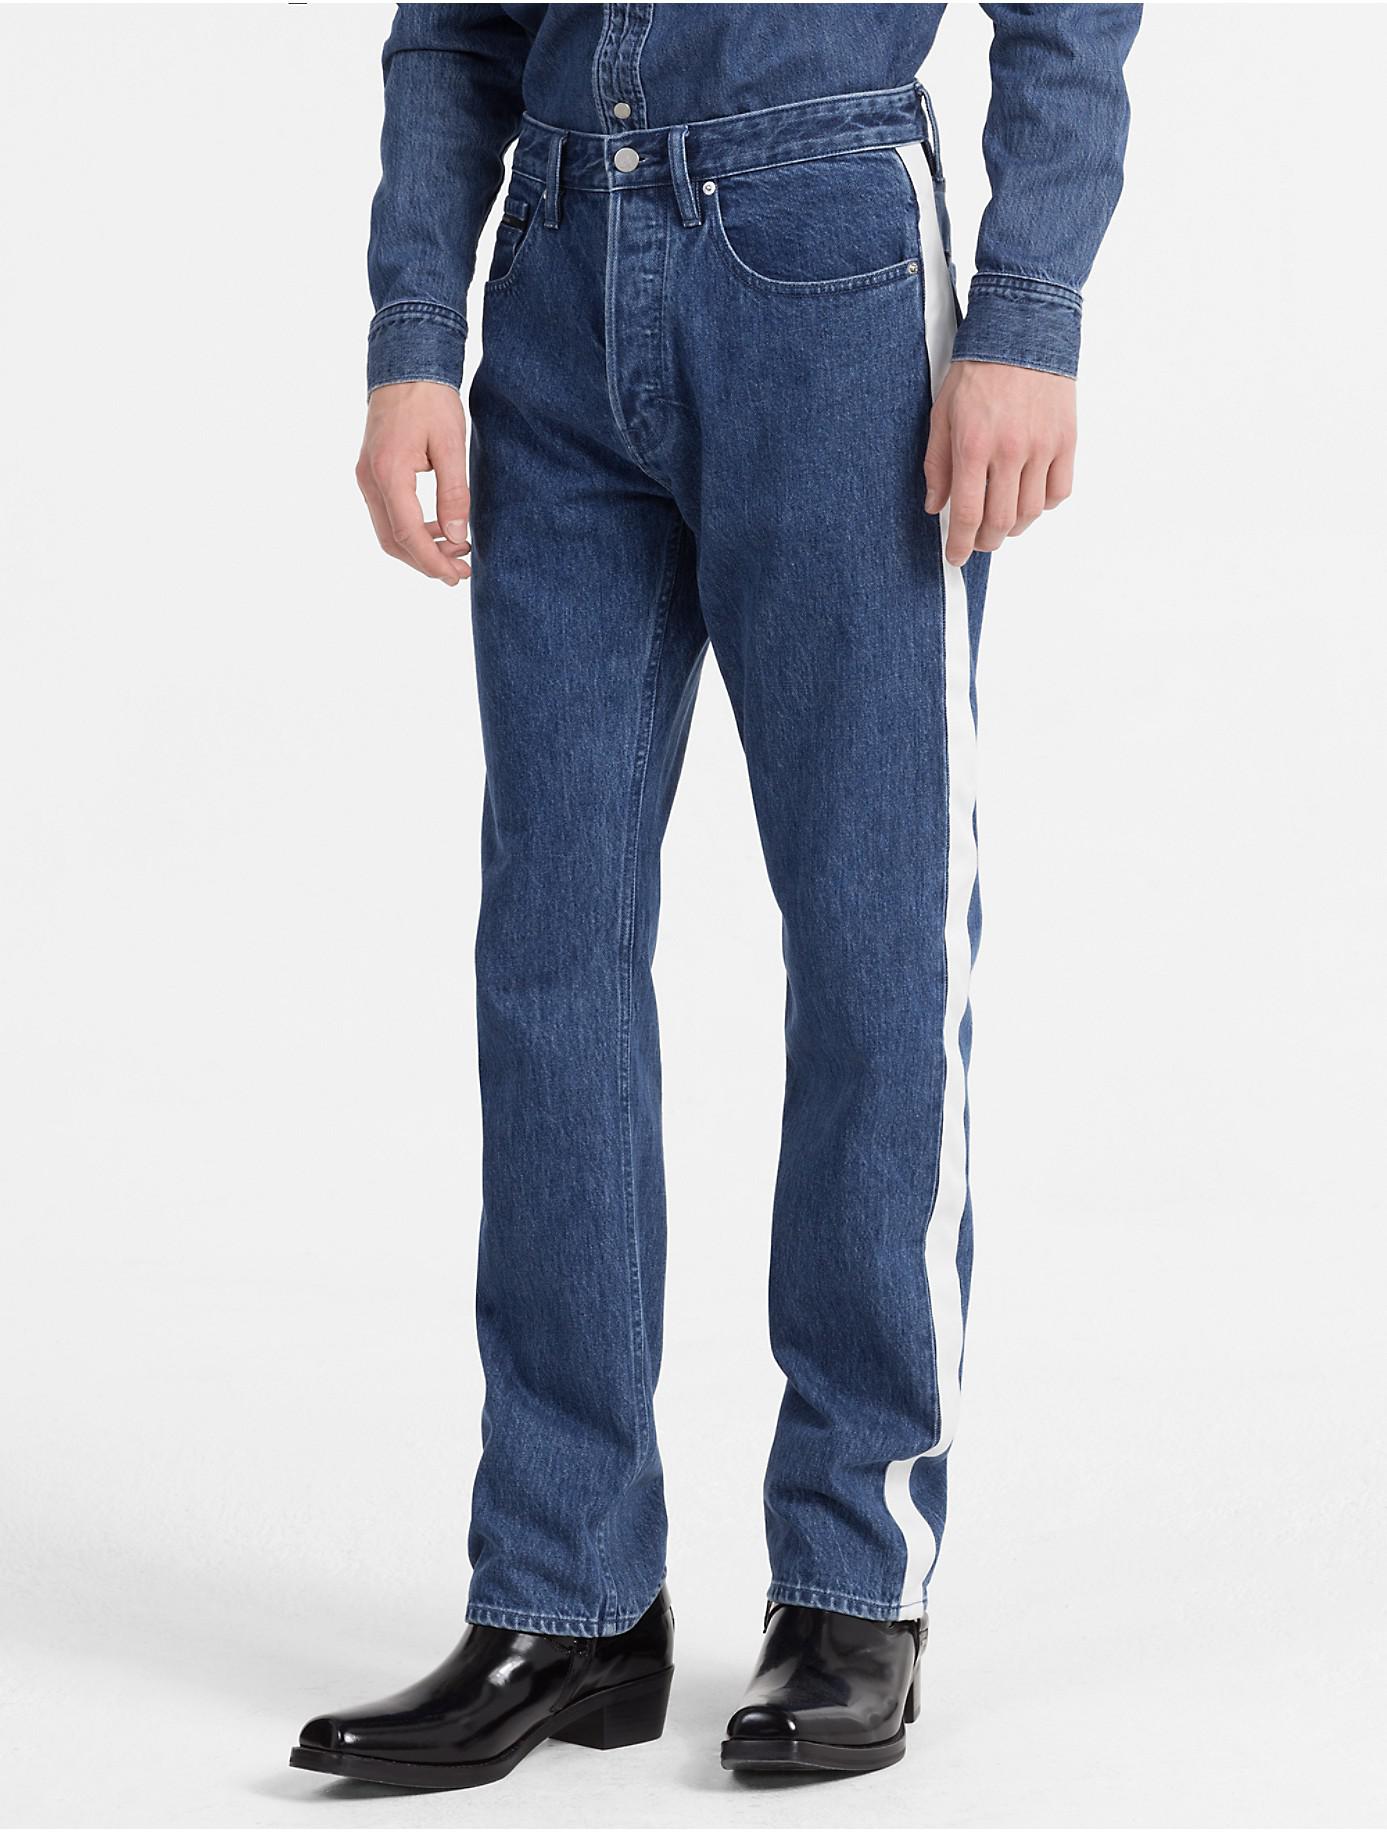 Calvin Klein Jeans With Stripe Hotsell, 51% OFF | www.ingeniovirtual.com